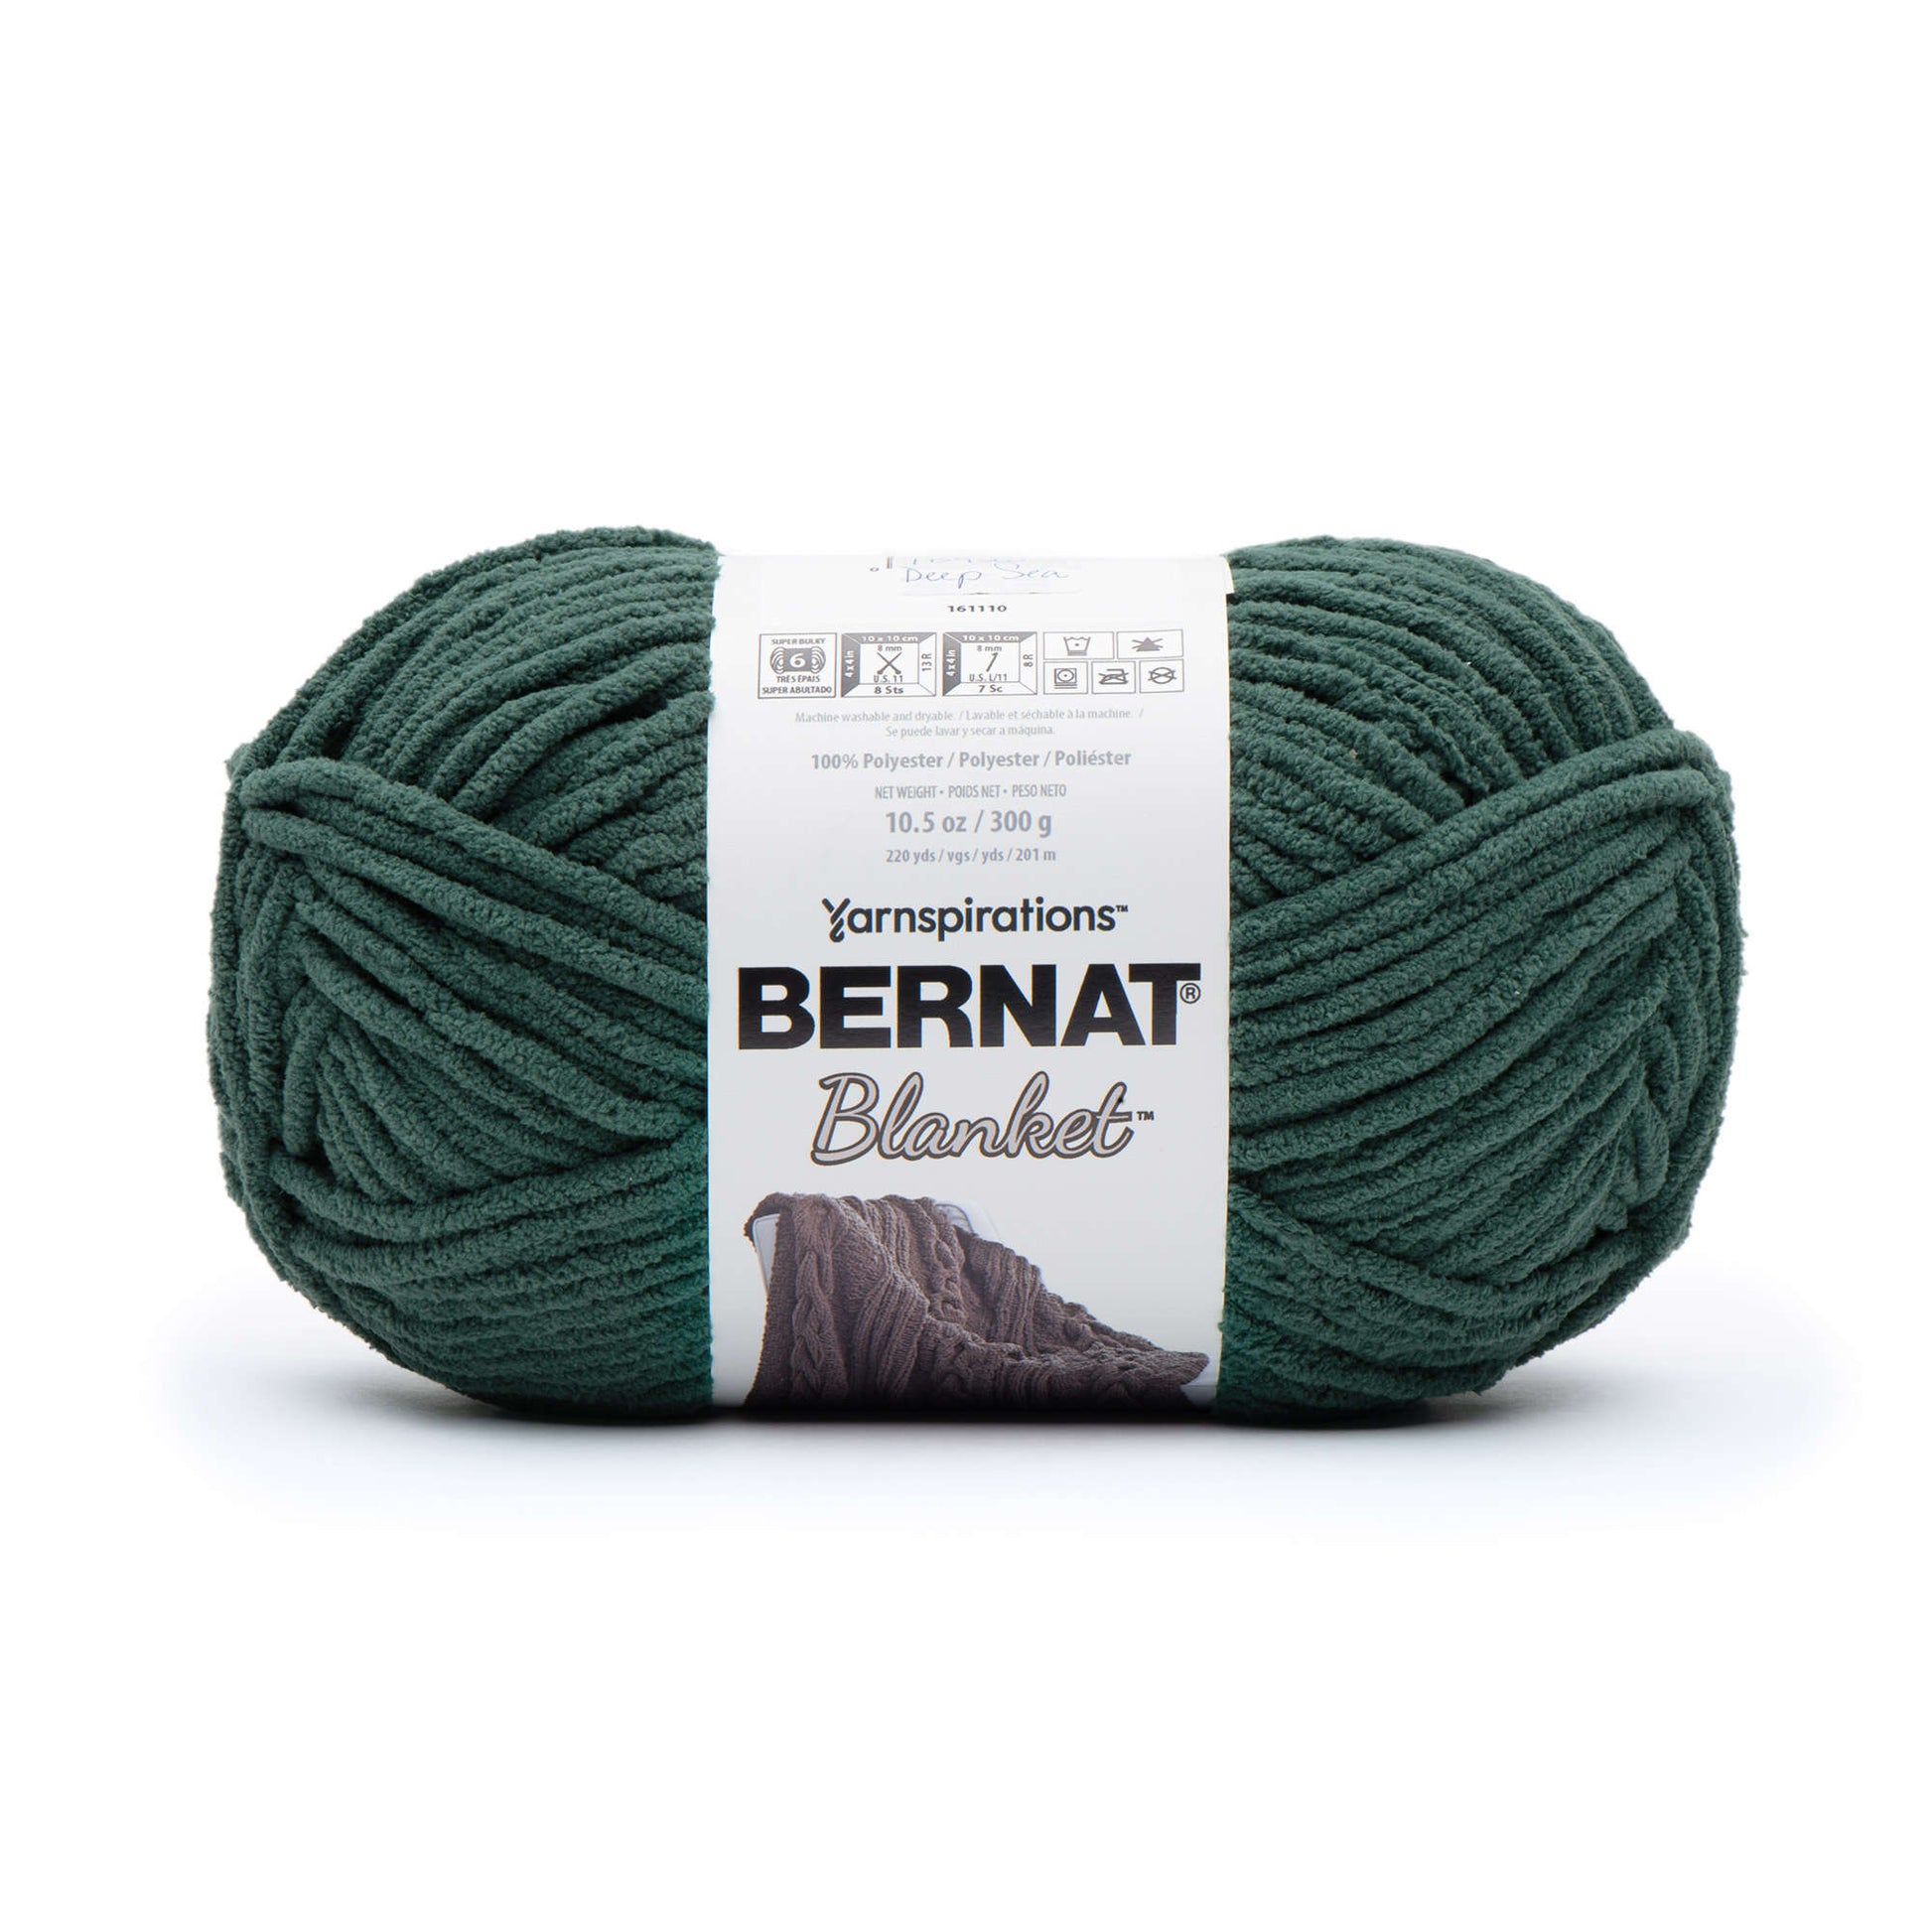 Bernat Blanket Yarn (300g/10.5oz) Deep Sea